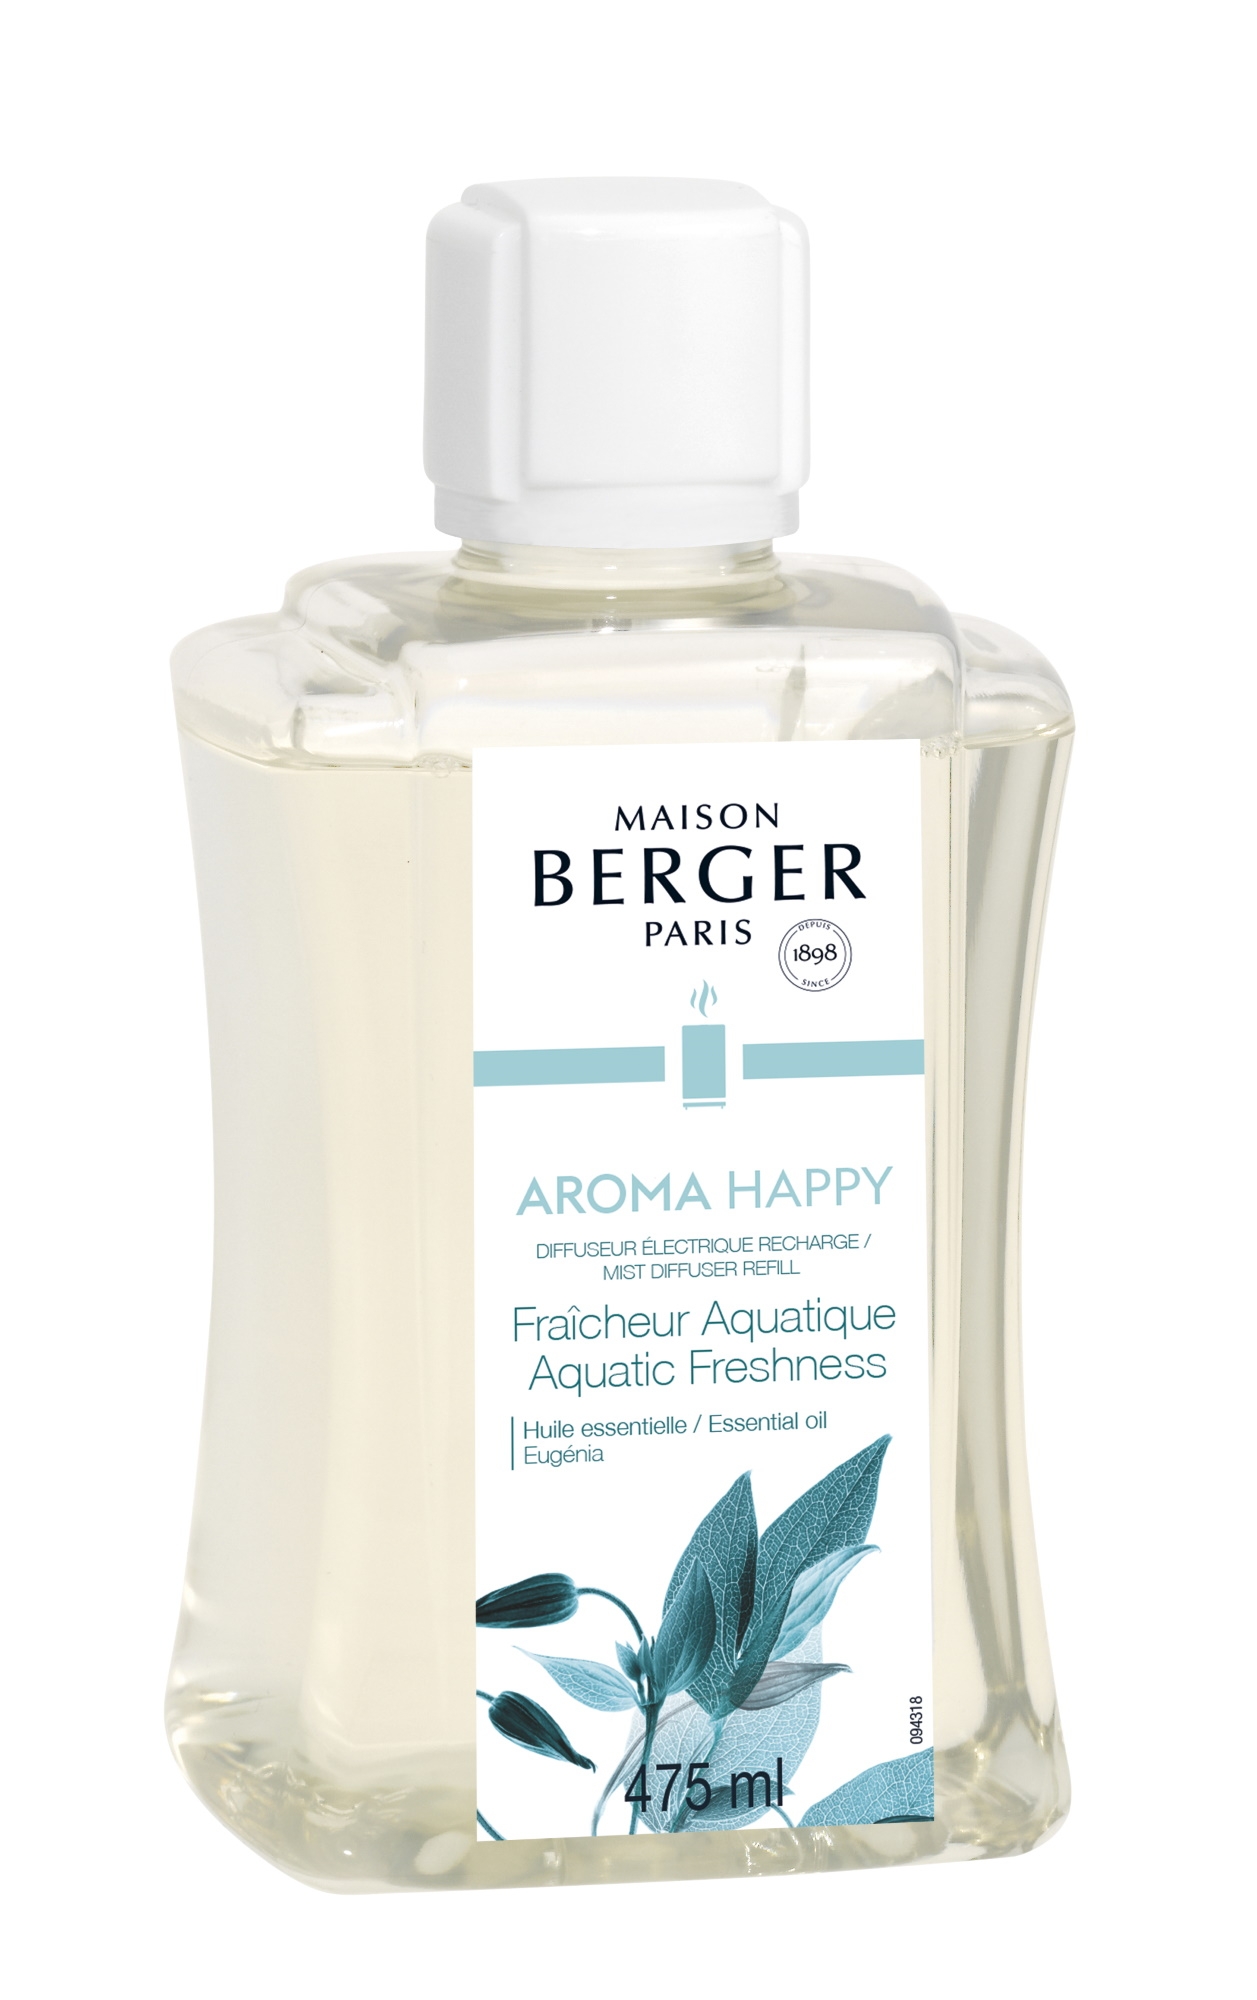 Parfum pentru difuzor ultrasonic Berger Aroma Happy – Fraicheur Aquatique 475ml 475ml pret redus